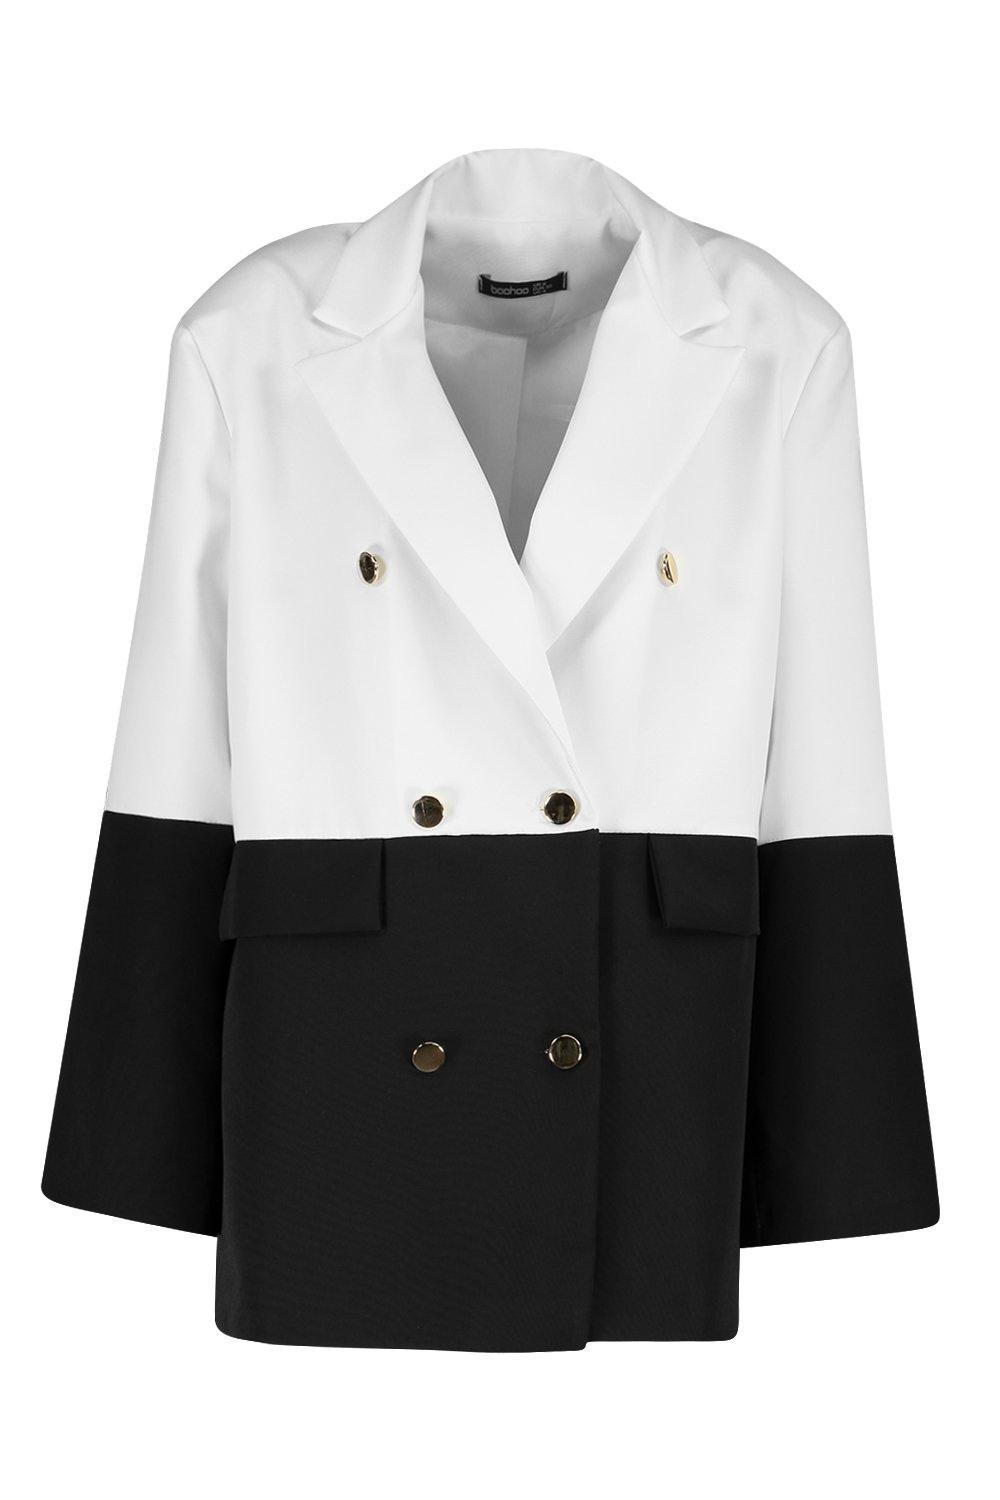 half white half black jacket